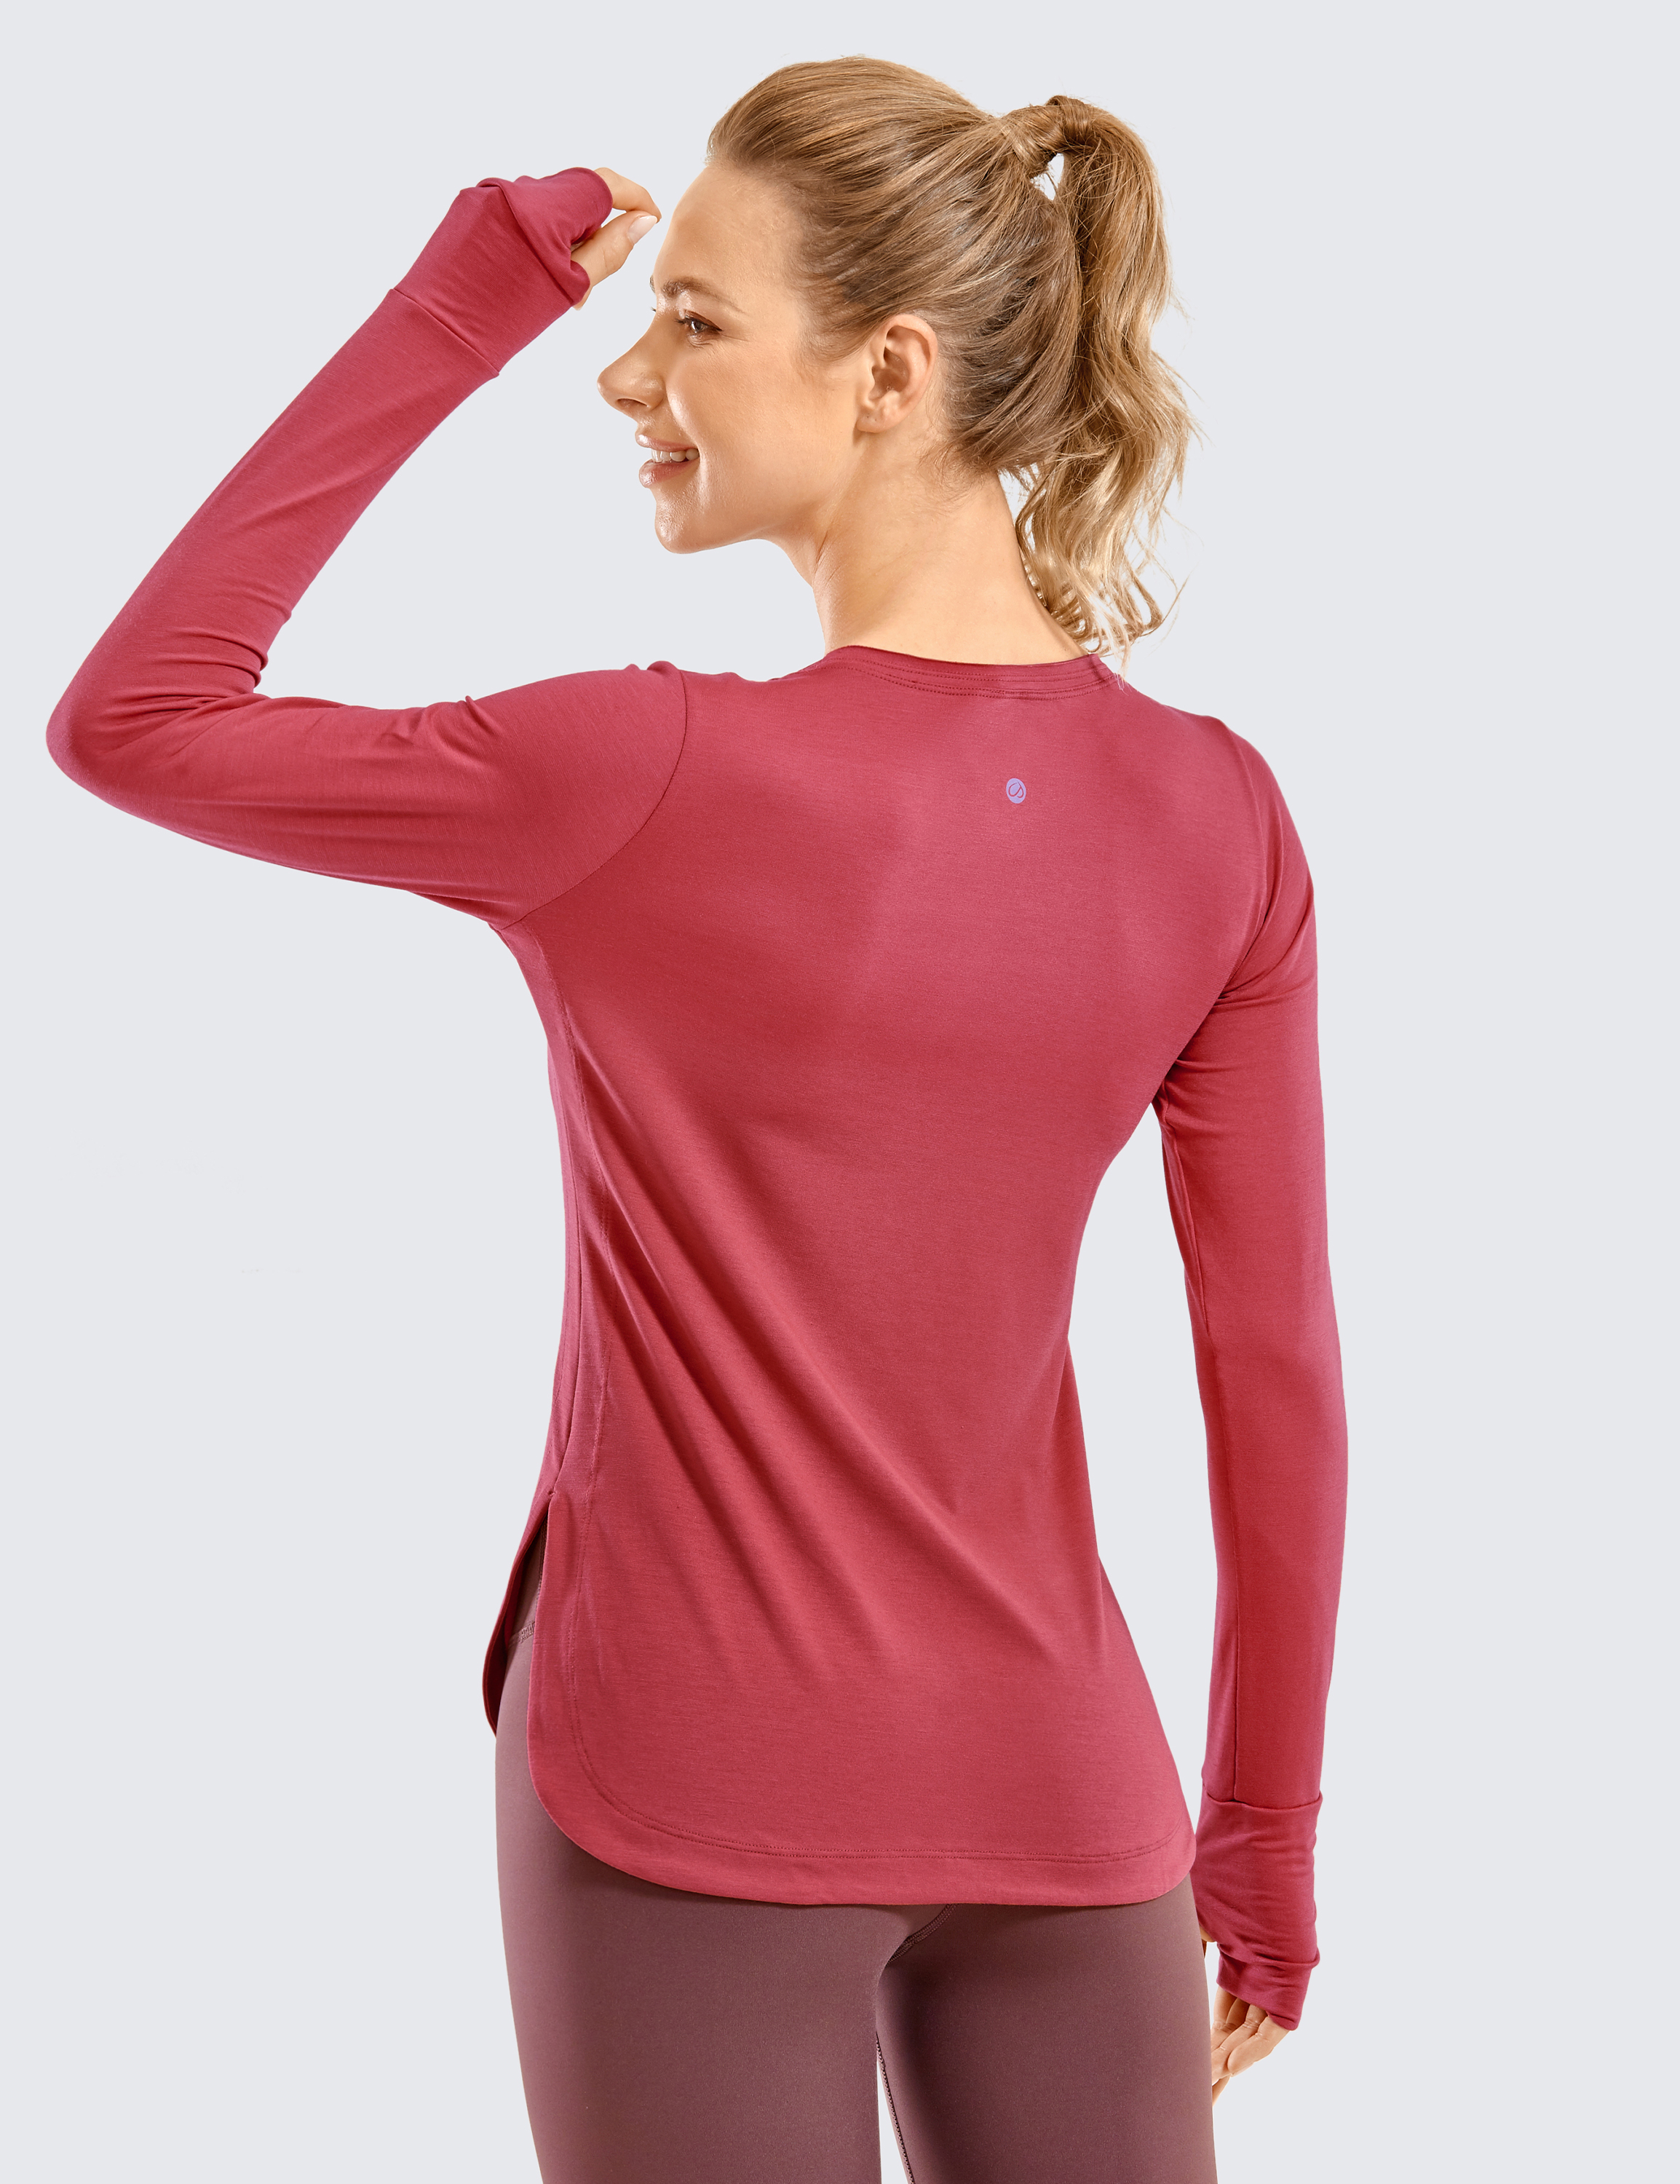 CRZ YOGA Women's Pima Cotton Loose Cropped Tank Tops Workout High Neck  Sleeveless Athletic Gym Shirts Black S price in UAE,  UAE